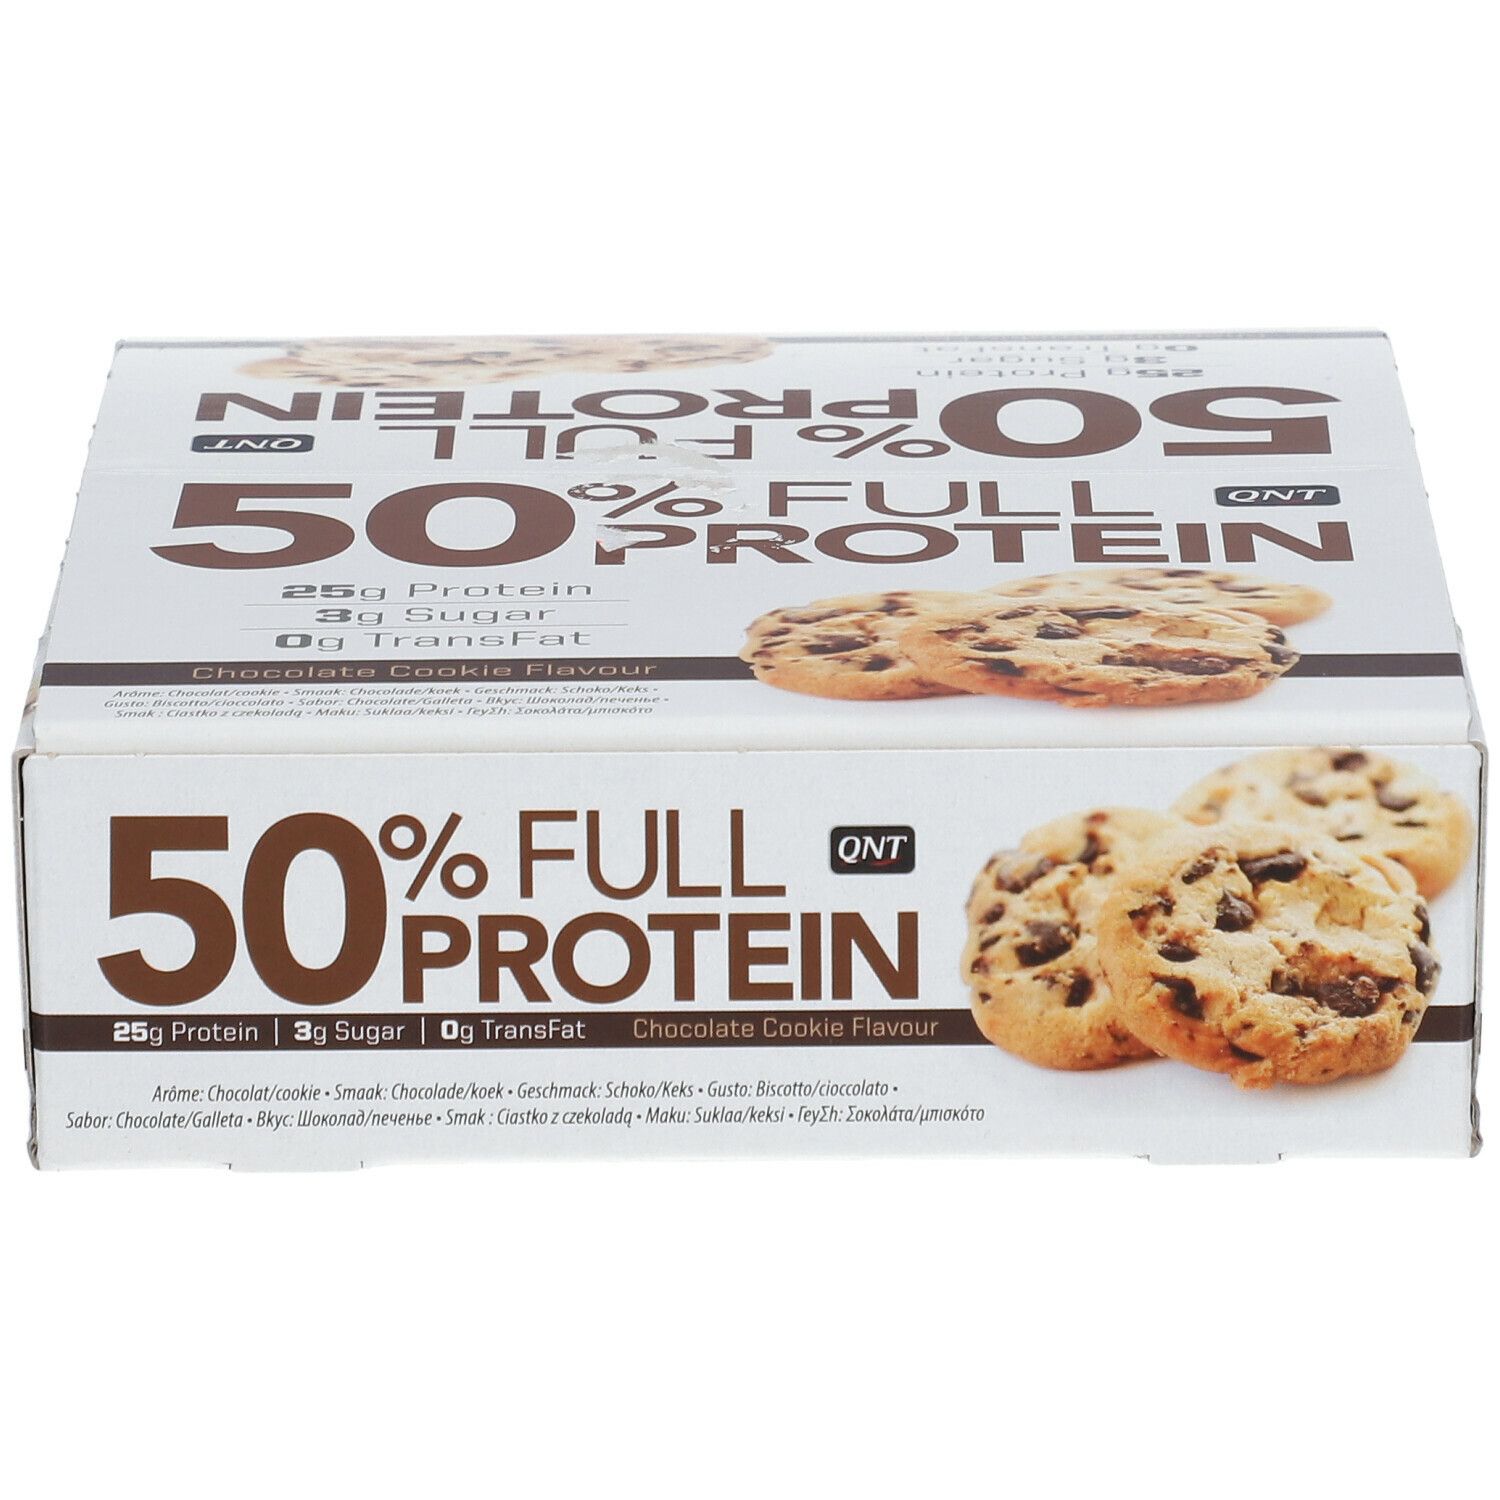 QNT 50% Full Proteinbar Chocolate Cookie